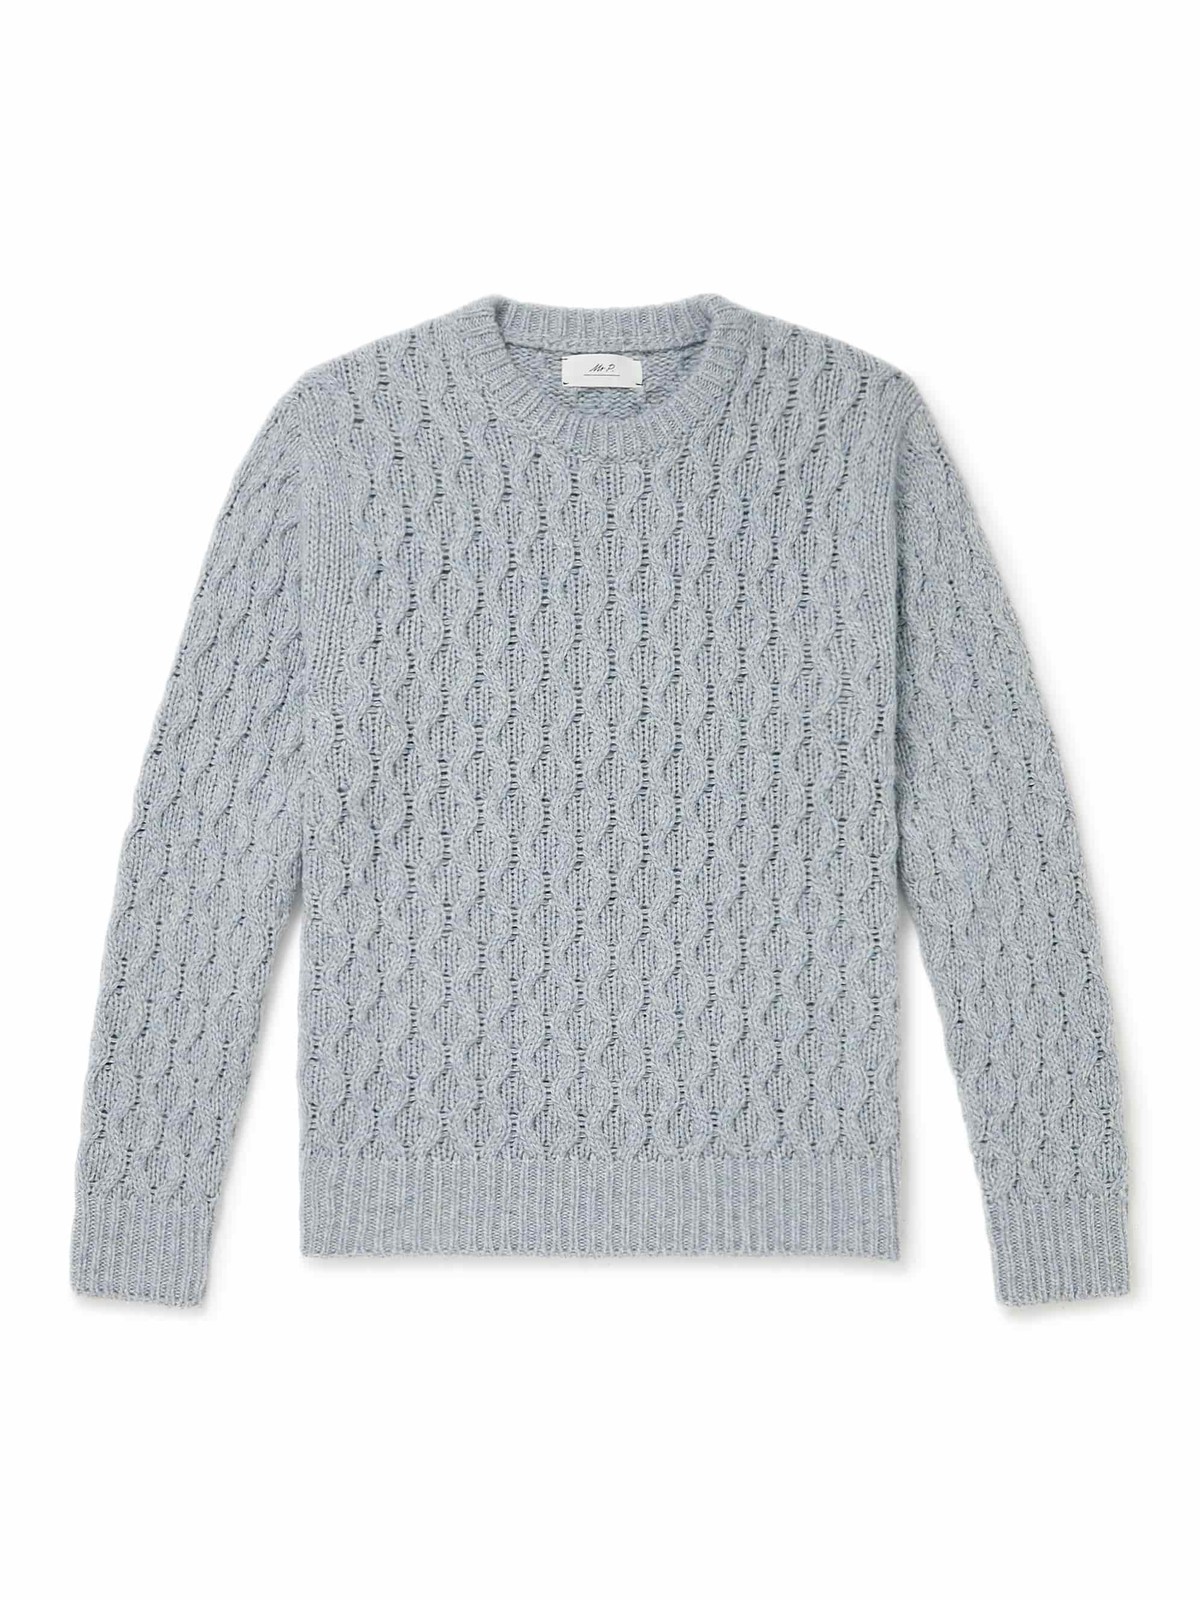 Mr P. Cable-Knit Alpaca-Blend Sweater_1357840_mrp_pr